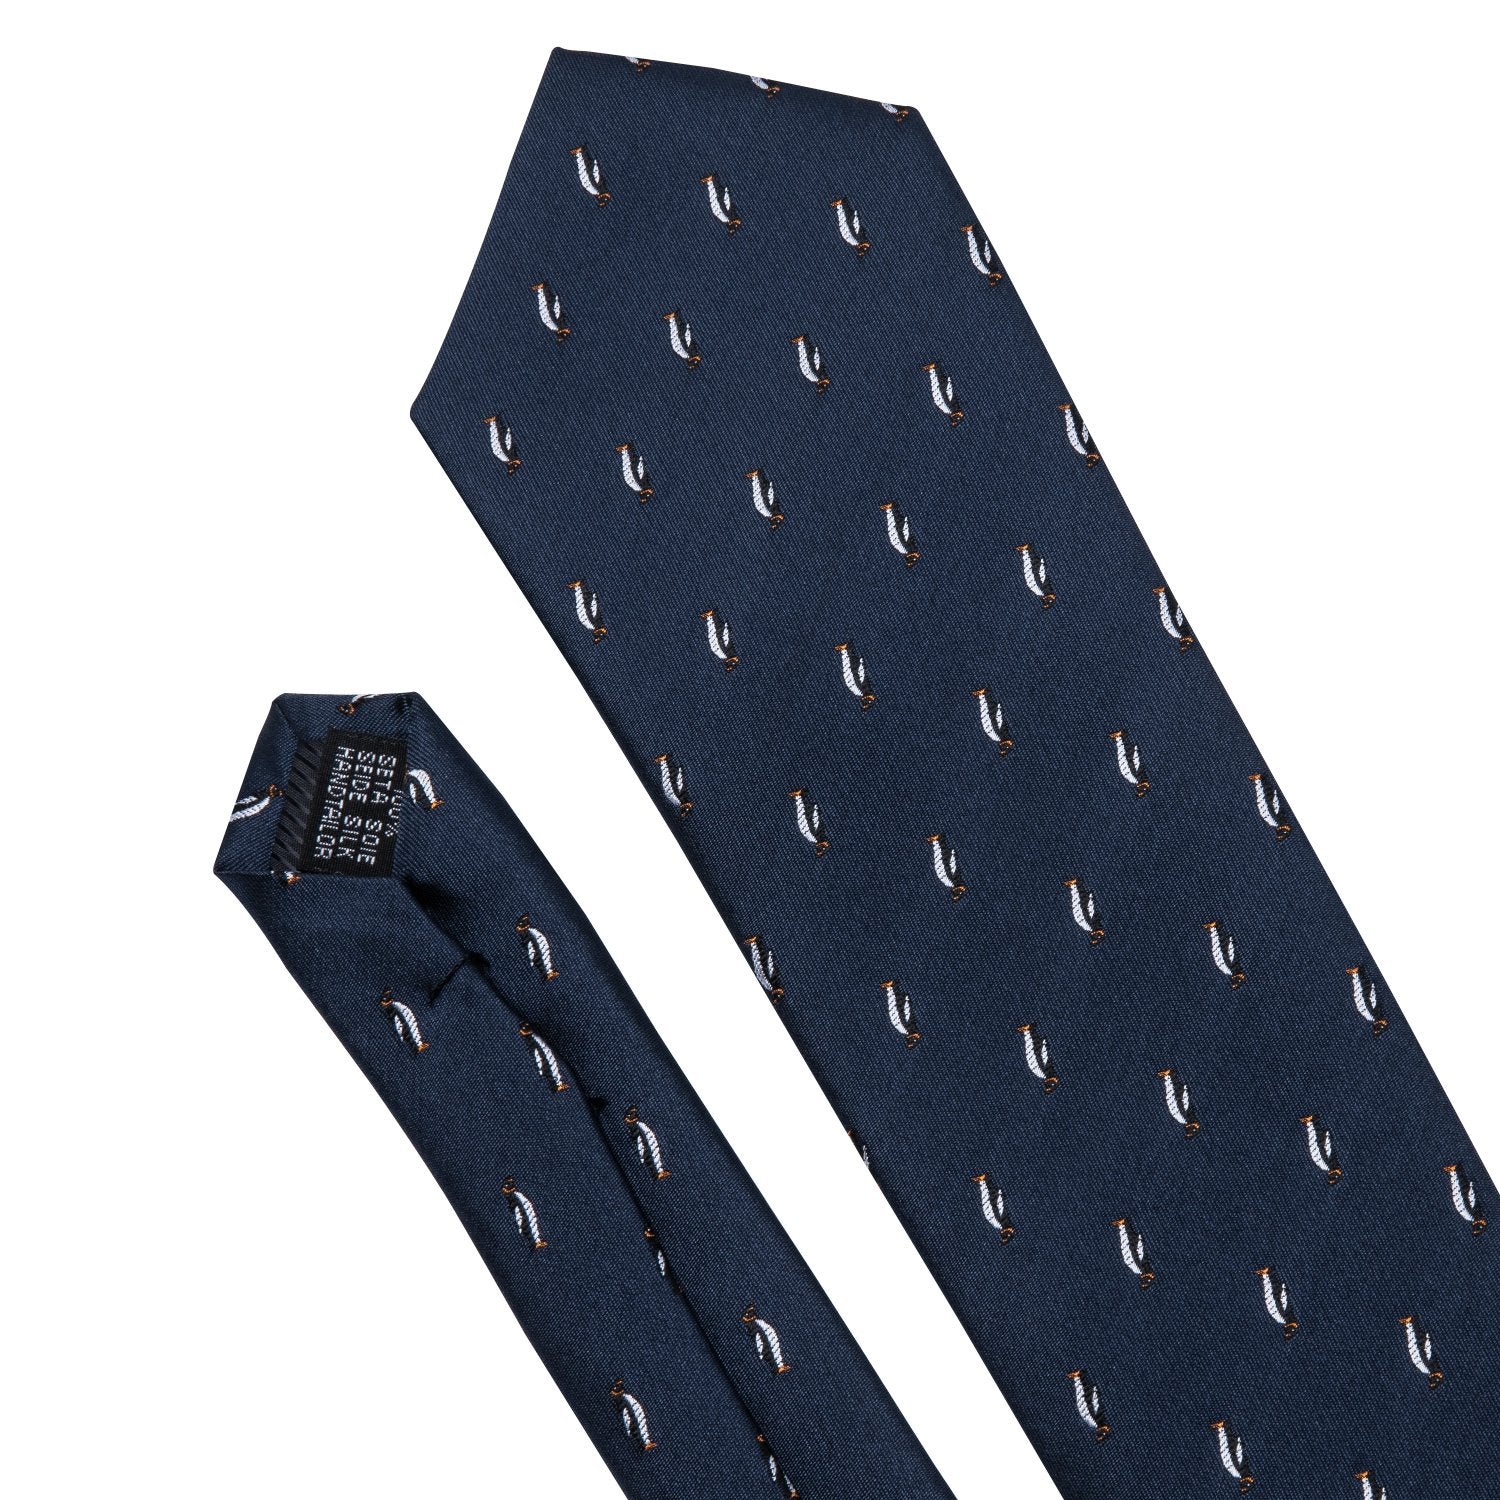 Penguin Blue Novelty Silk Men's Tie Hanky Cufflinks Set - barry-wang